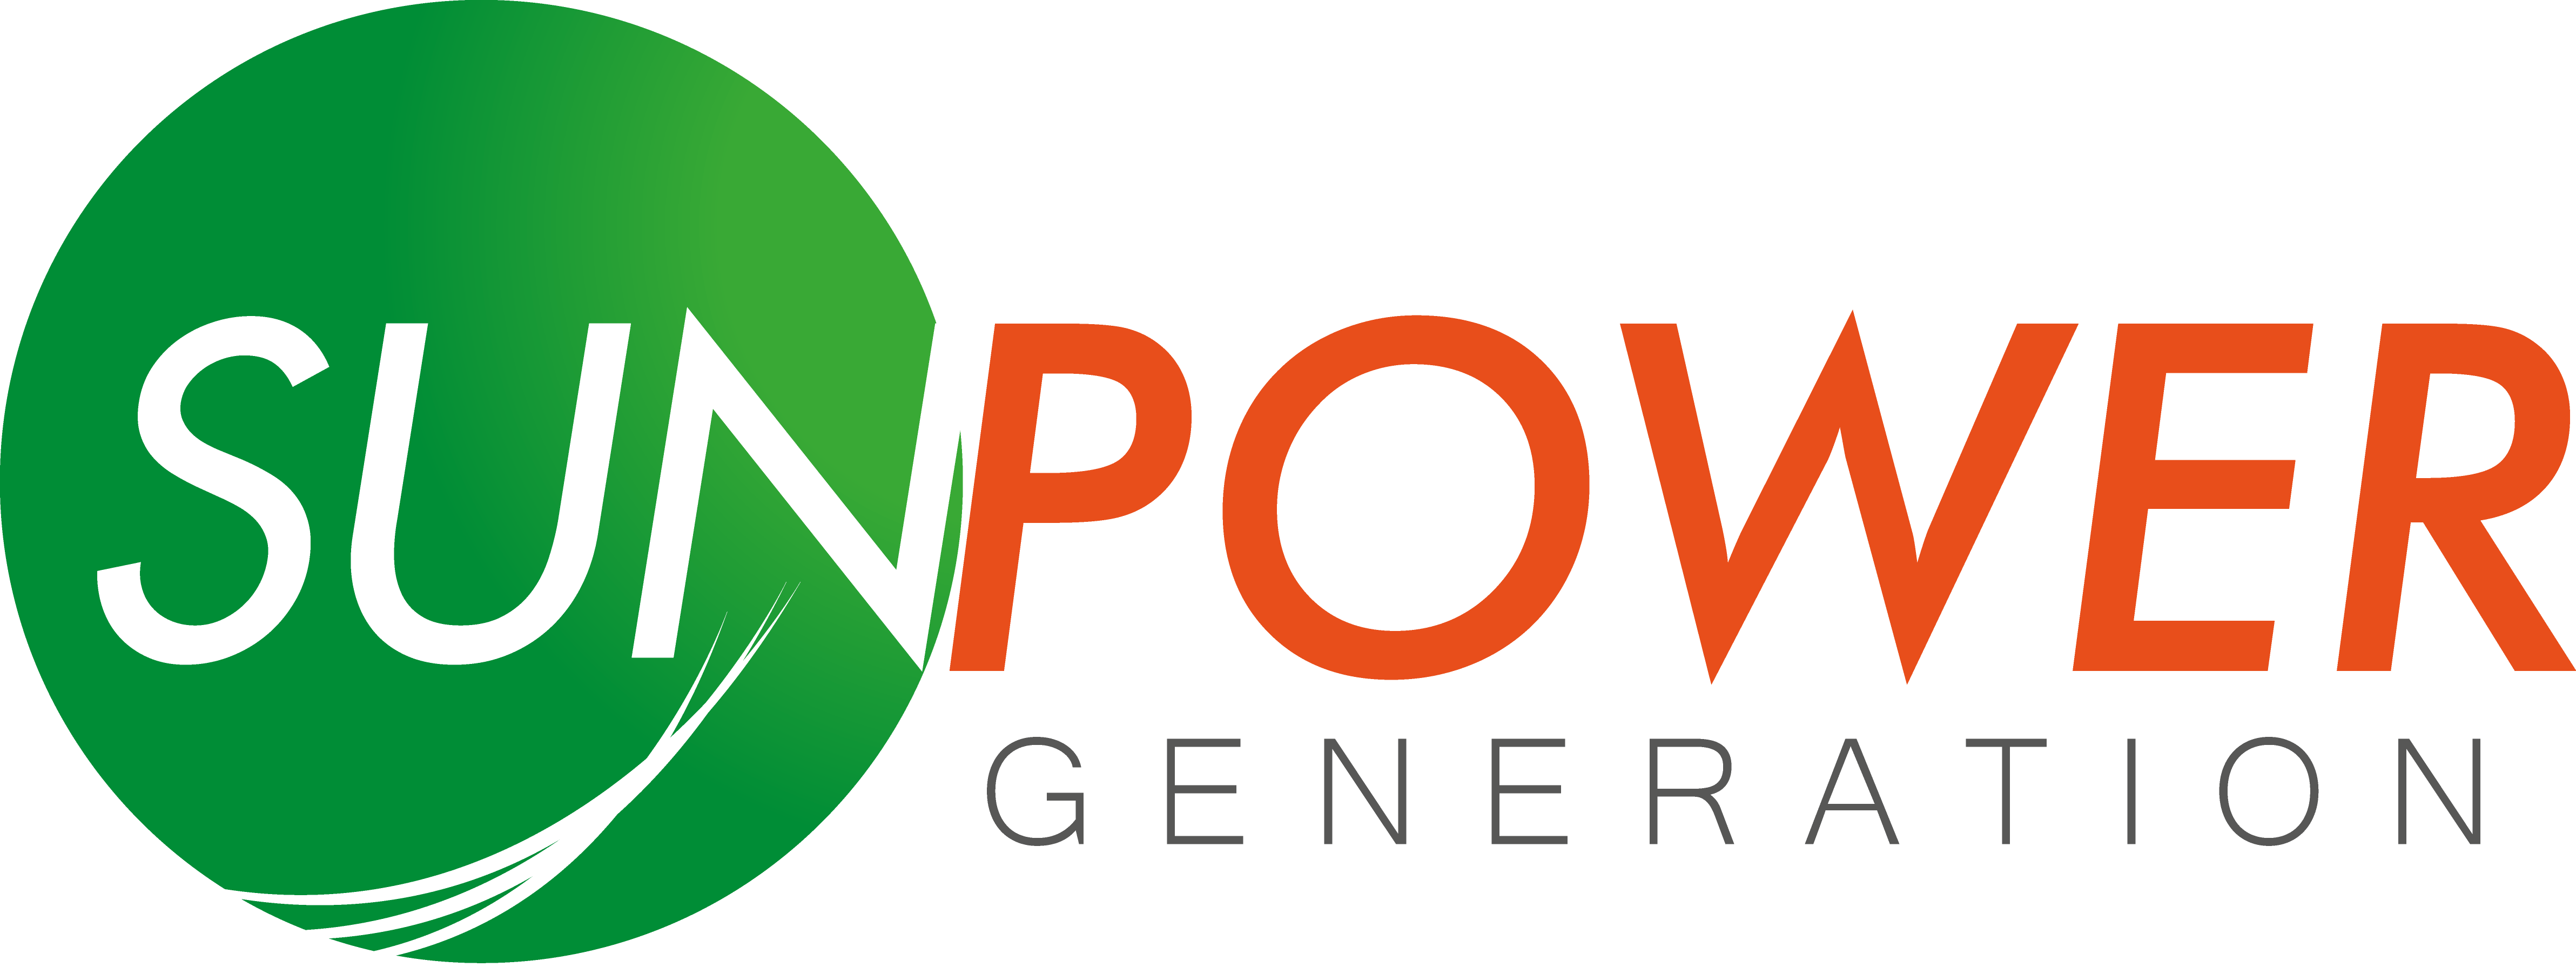 SunPower Logo - SunPower Generation - Solar Energy Equipment Distributor